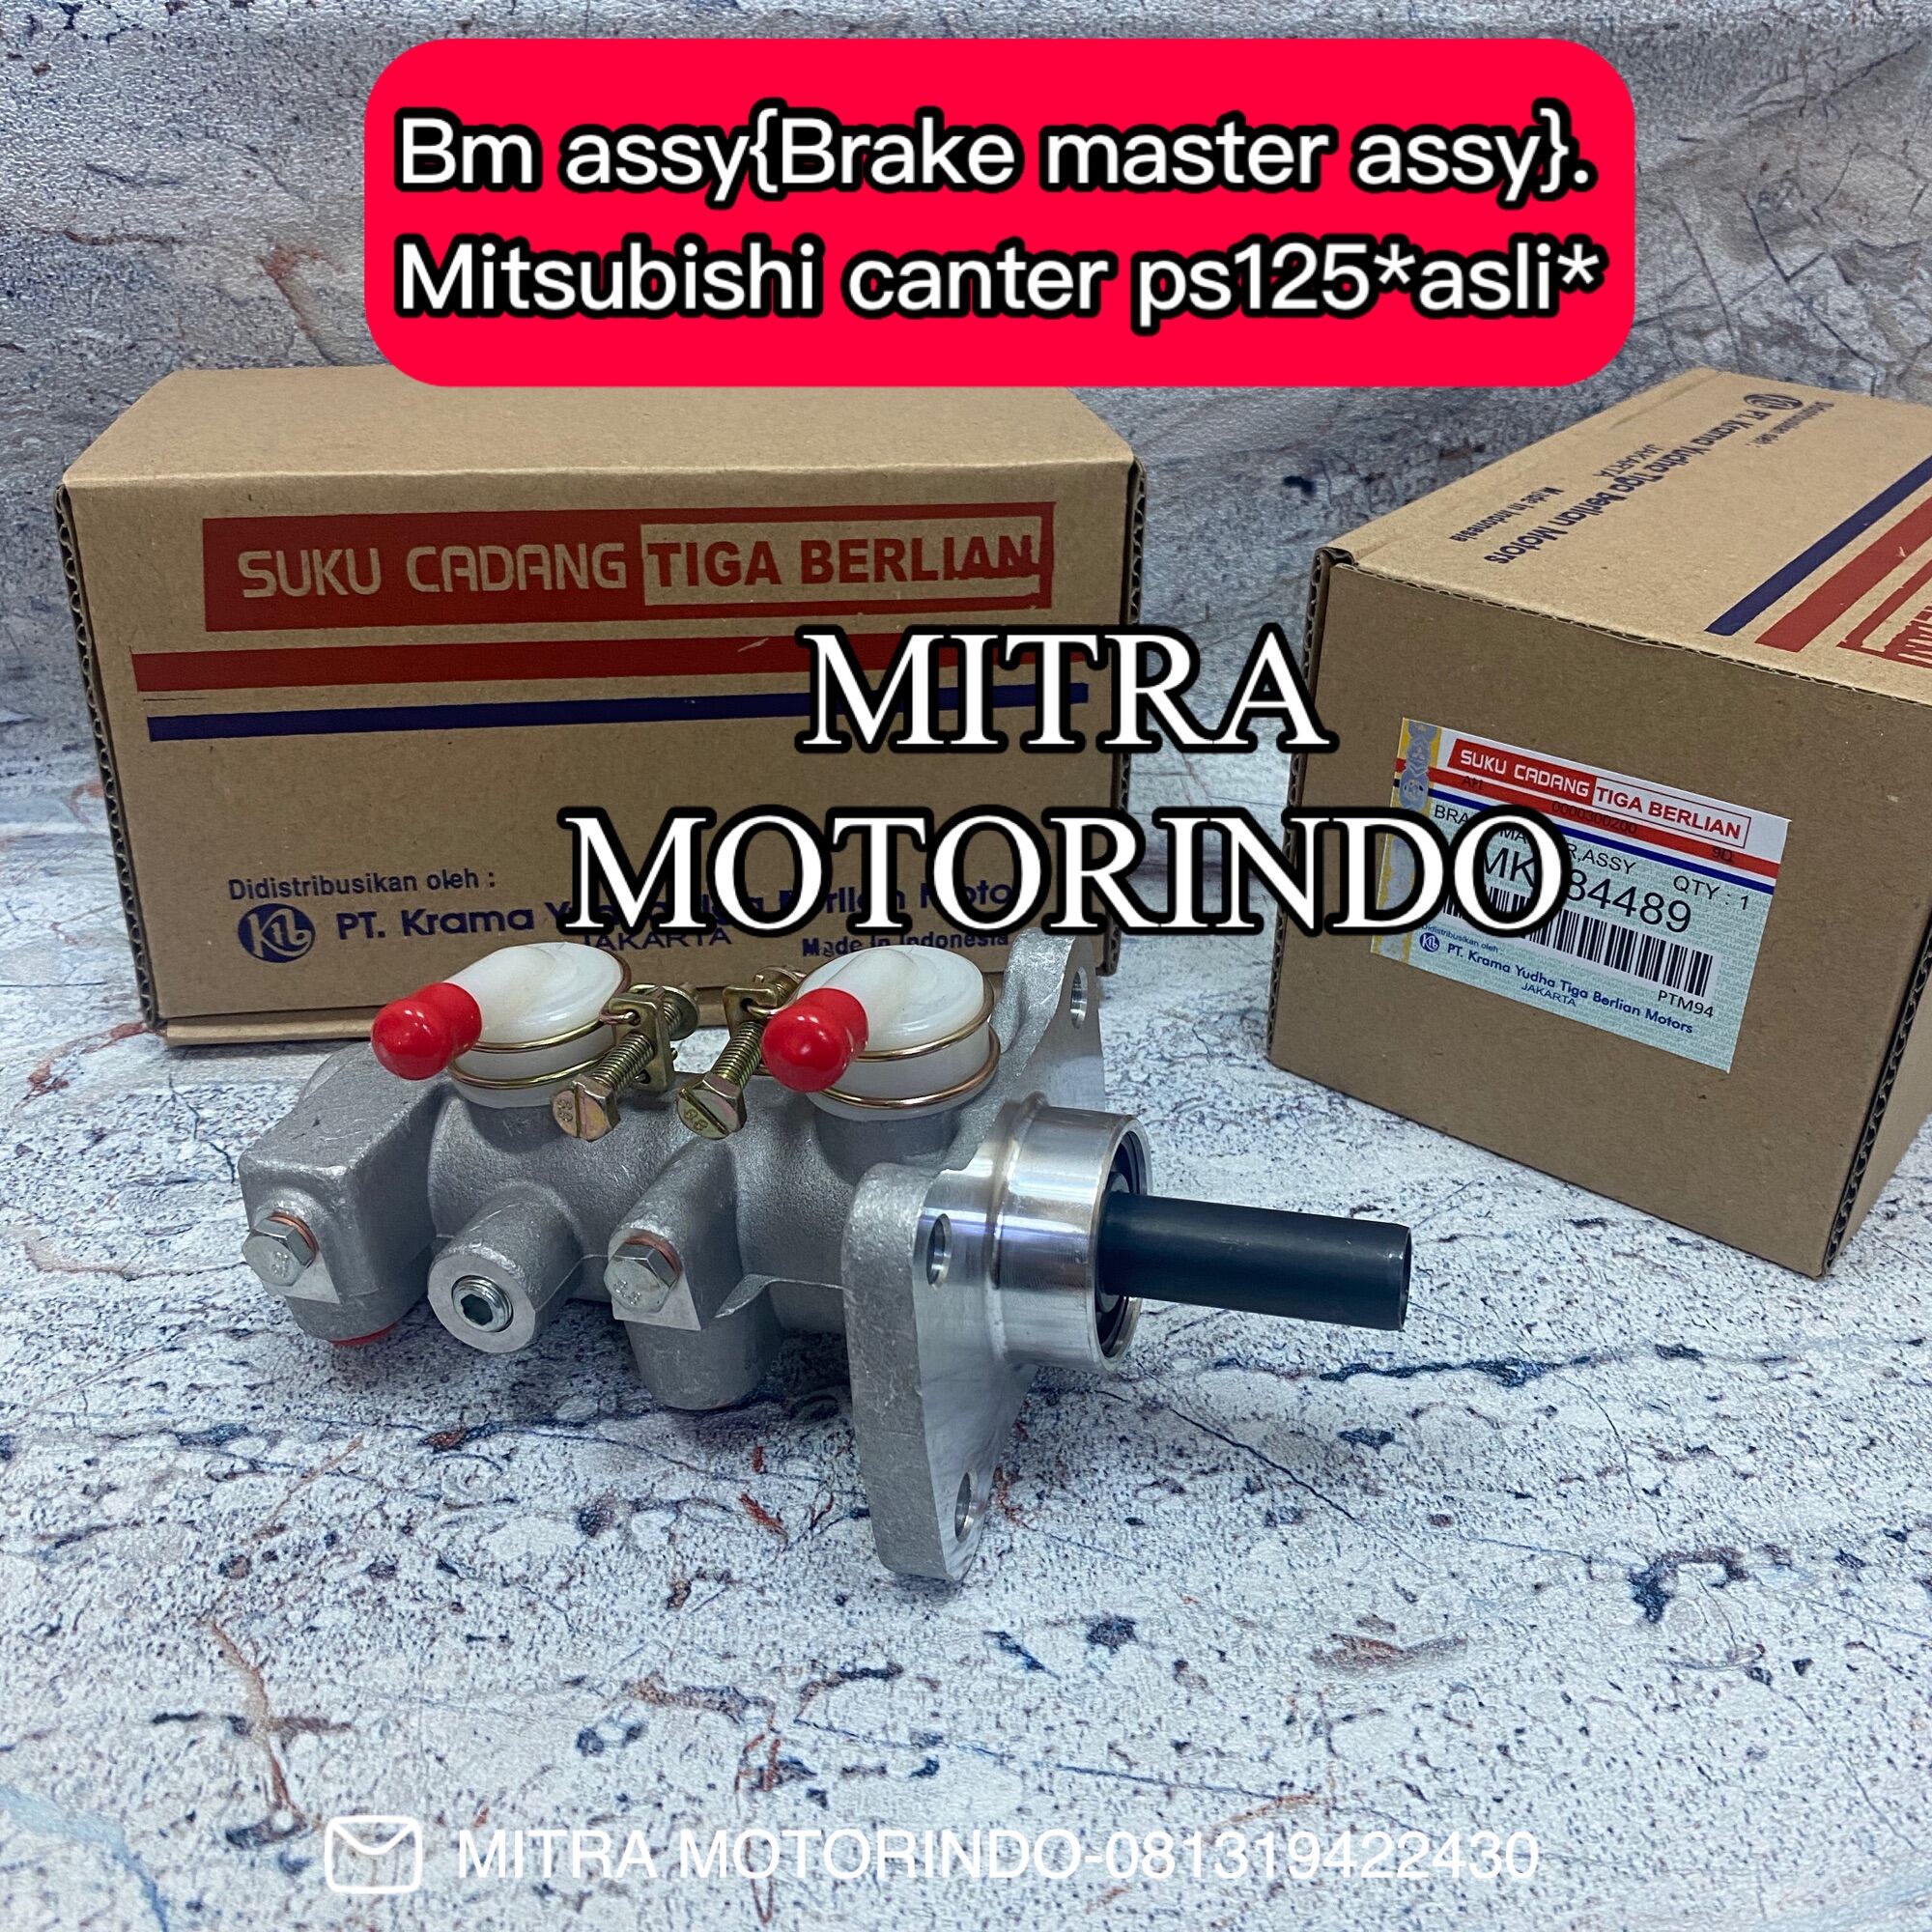 Bm assy-Brake master assy-Master rem atas asli Canter ps125 Turbo MK384489